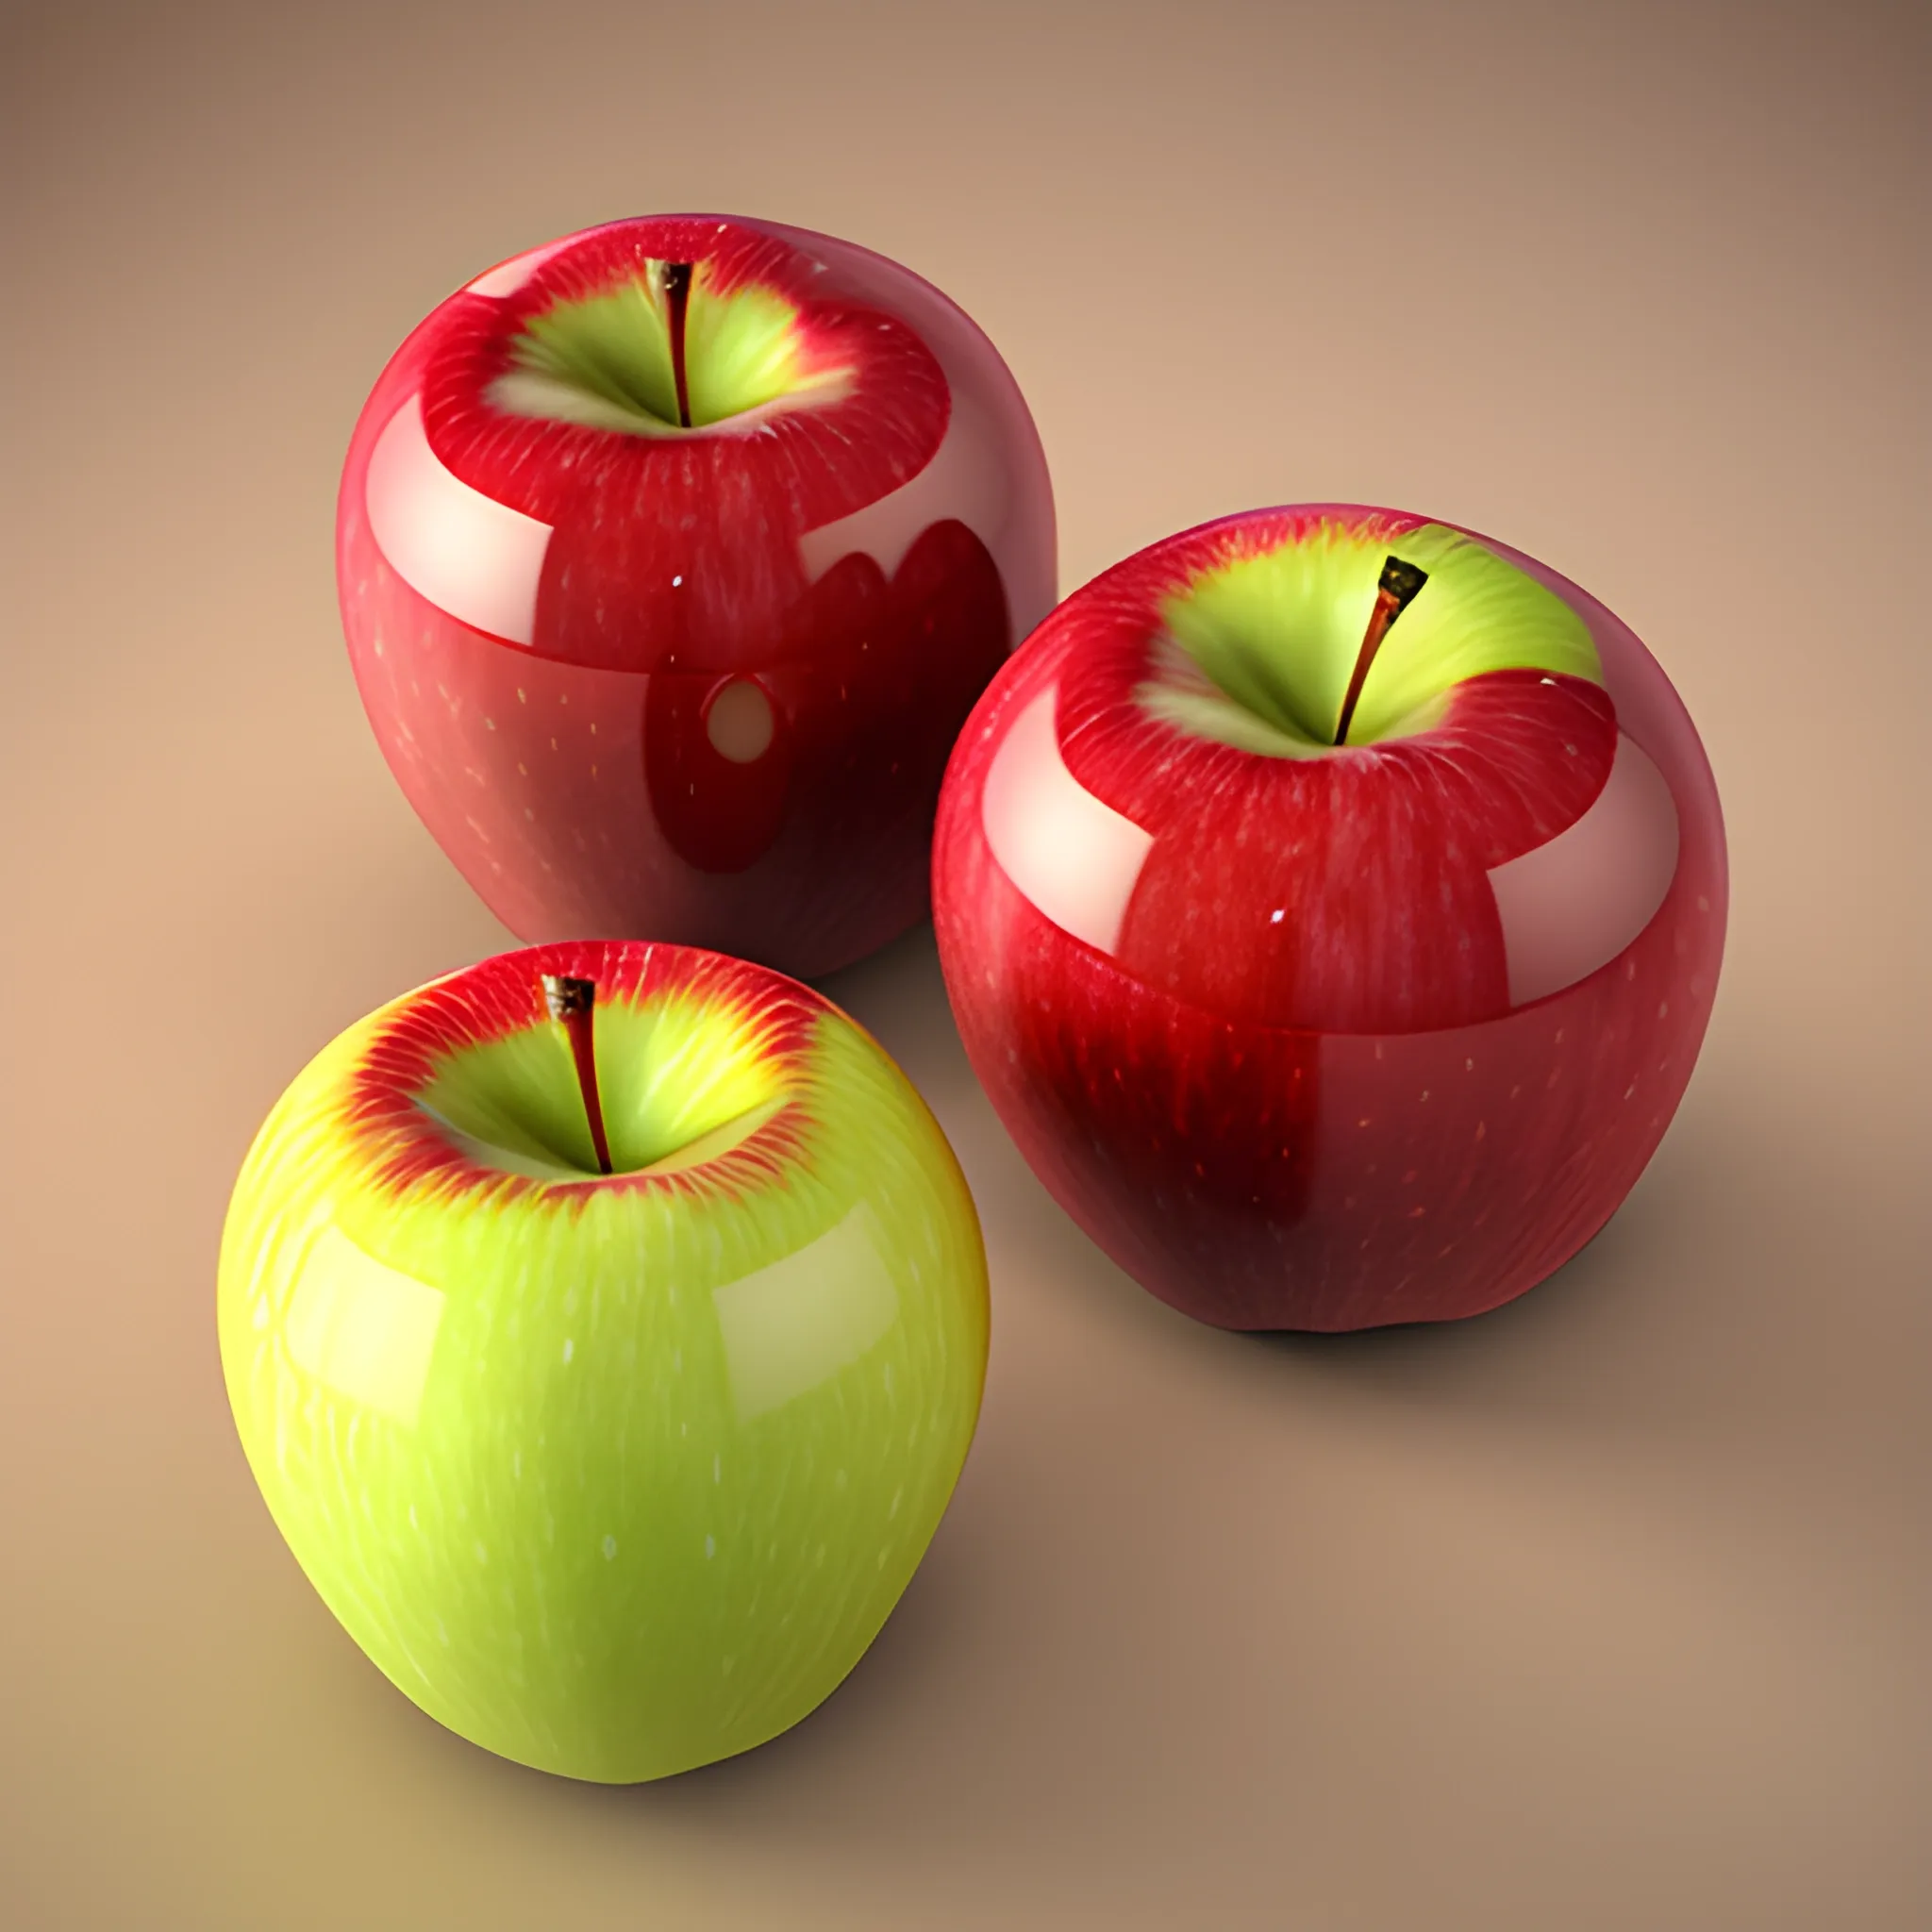 photorealistic apples